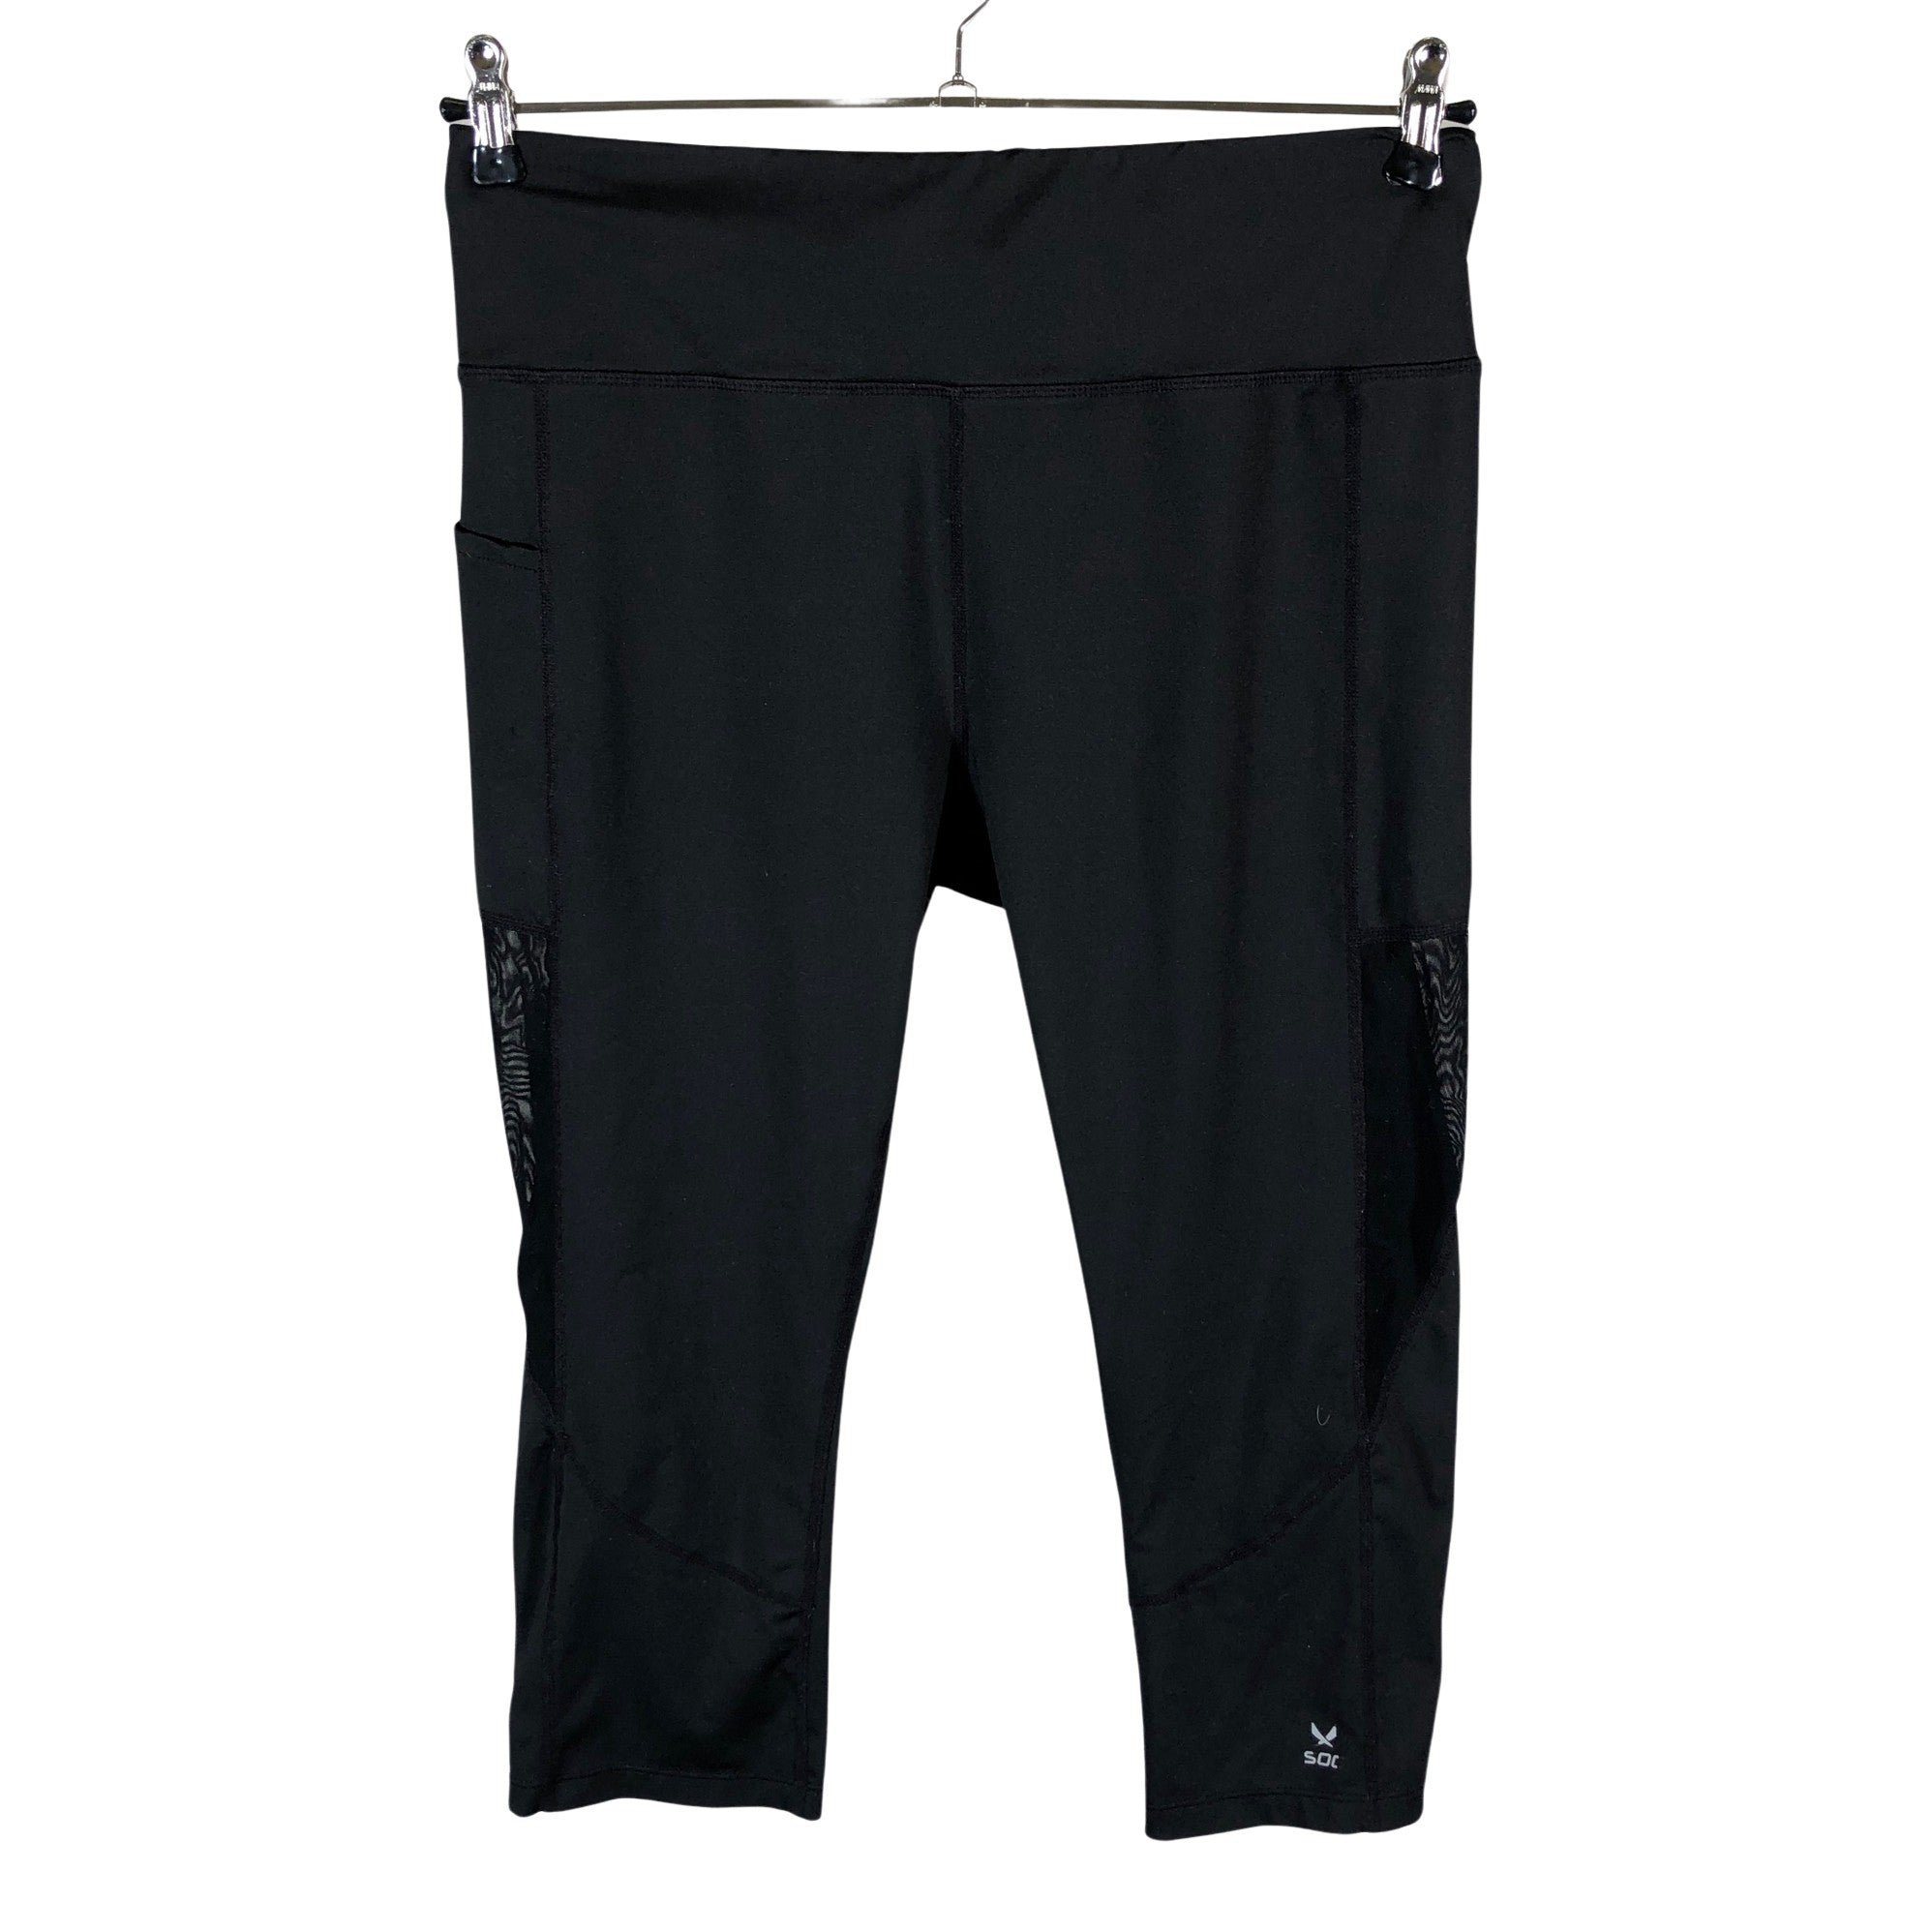 Women's Soc Sports capri pants, size 42 (Black)